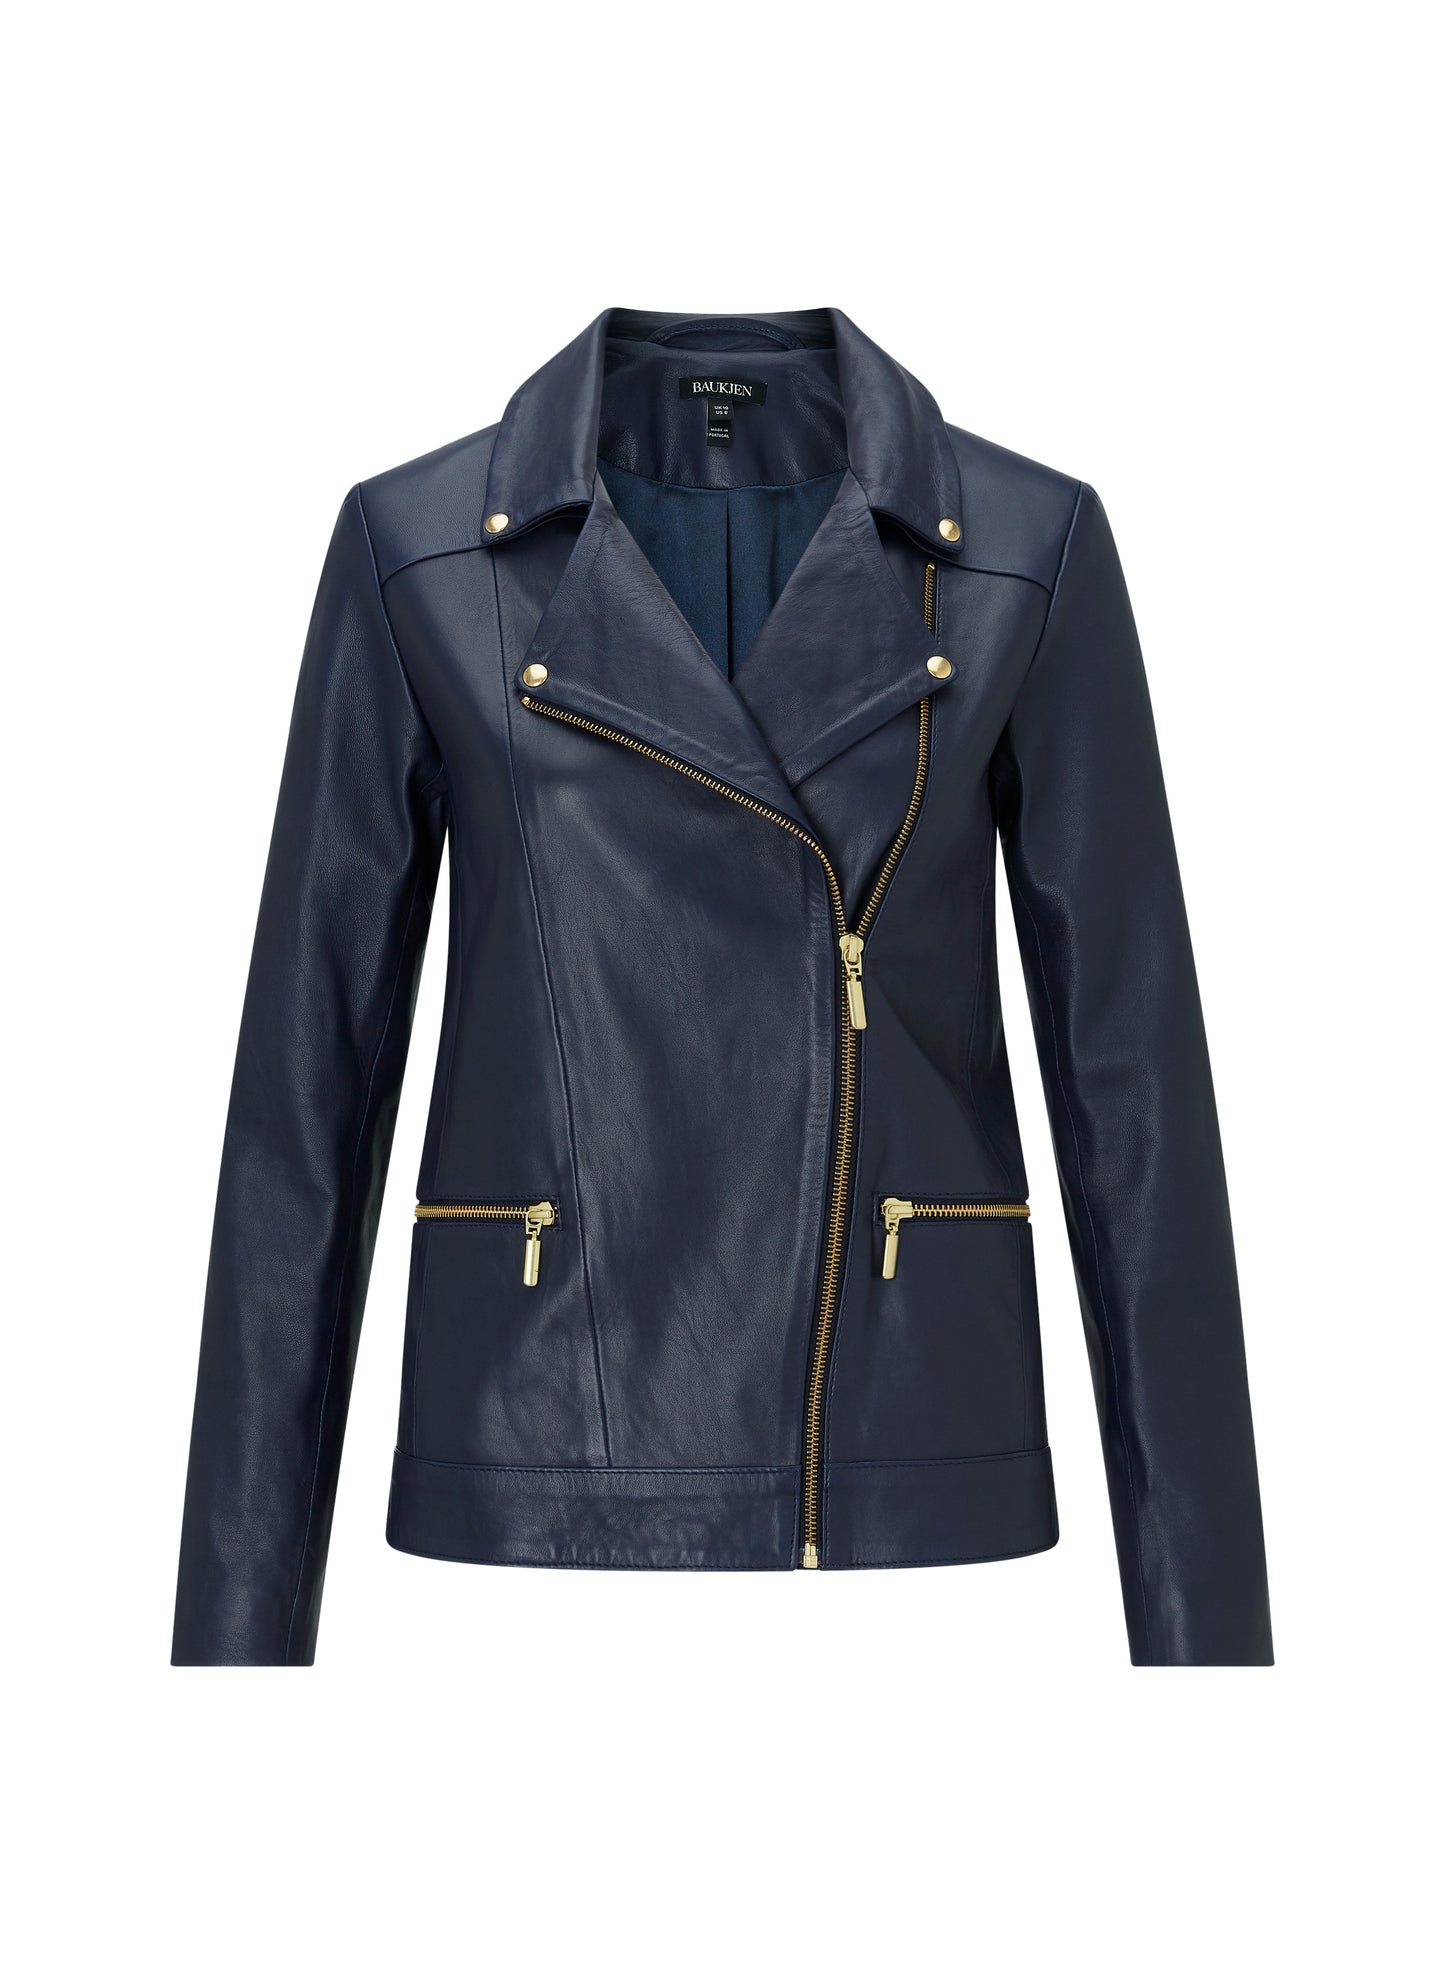 Kara Leather Jacket to Rent